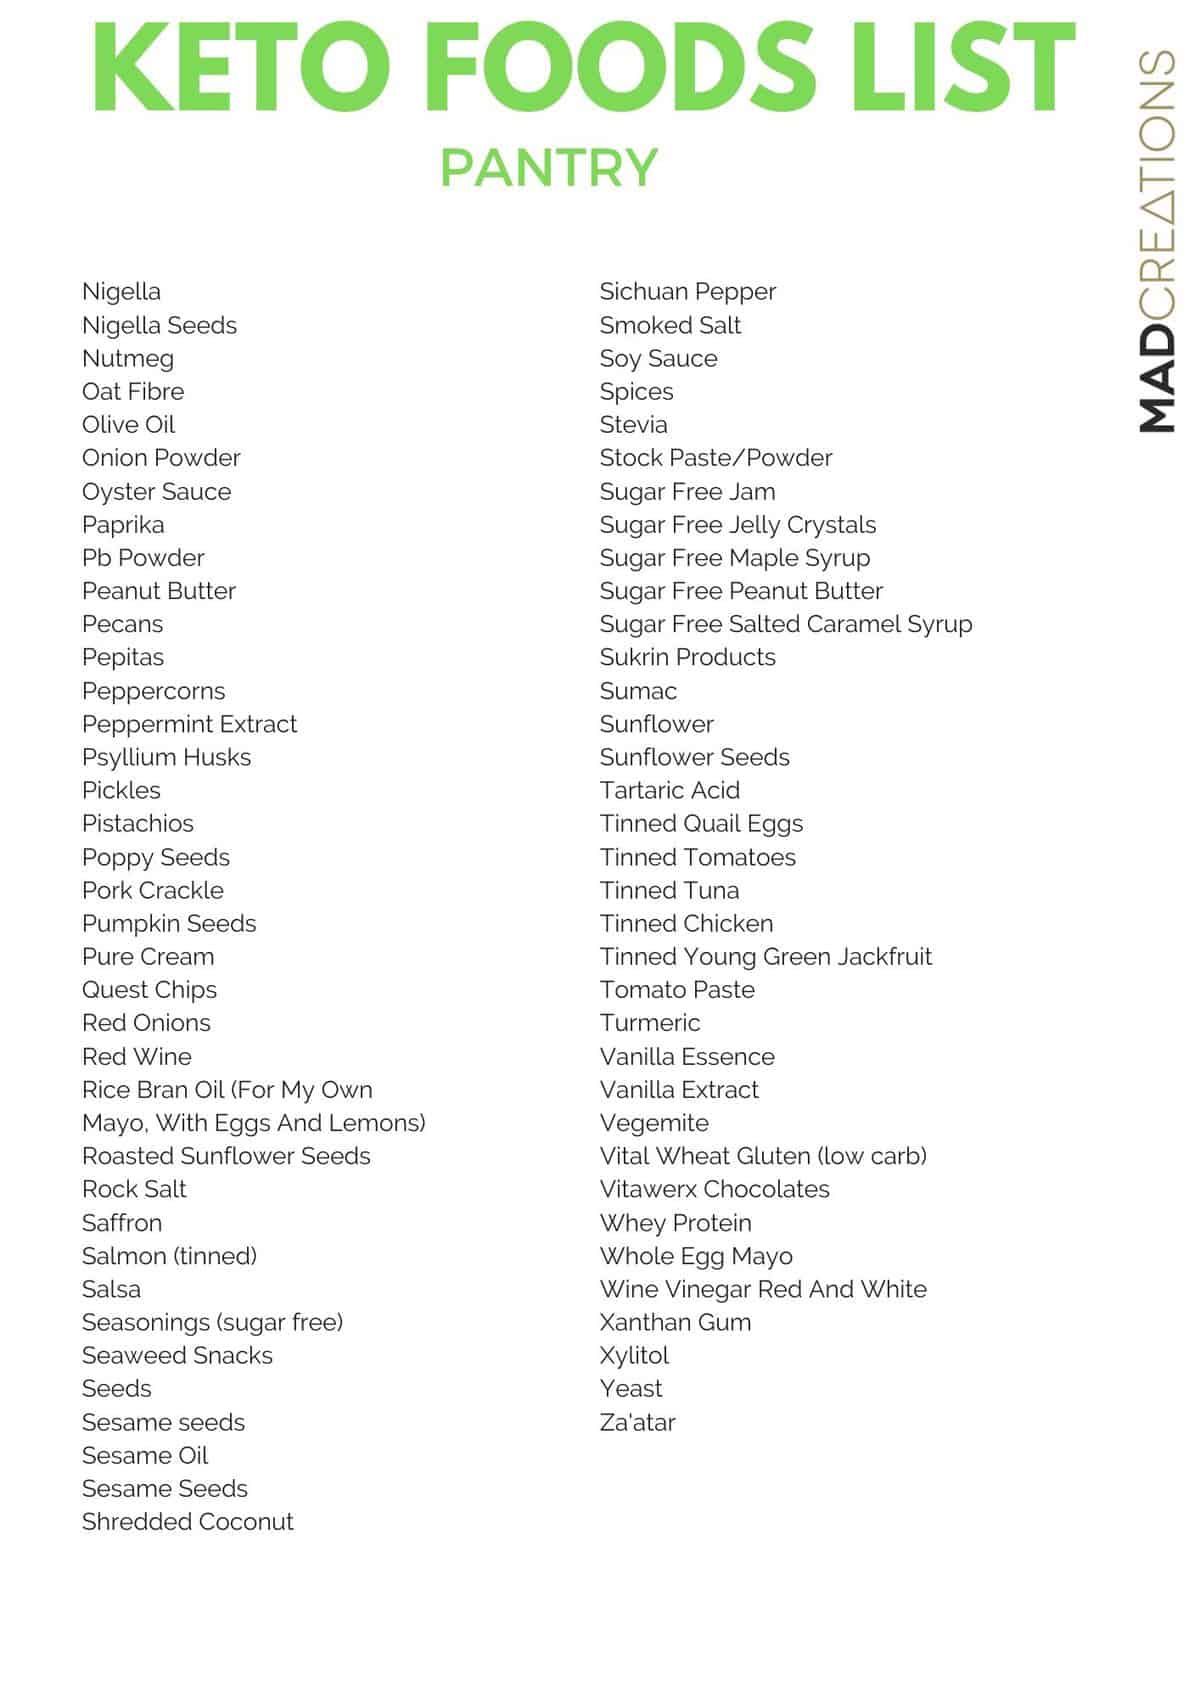 image of a keto food list